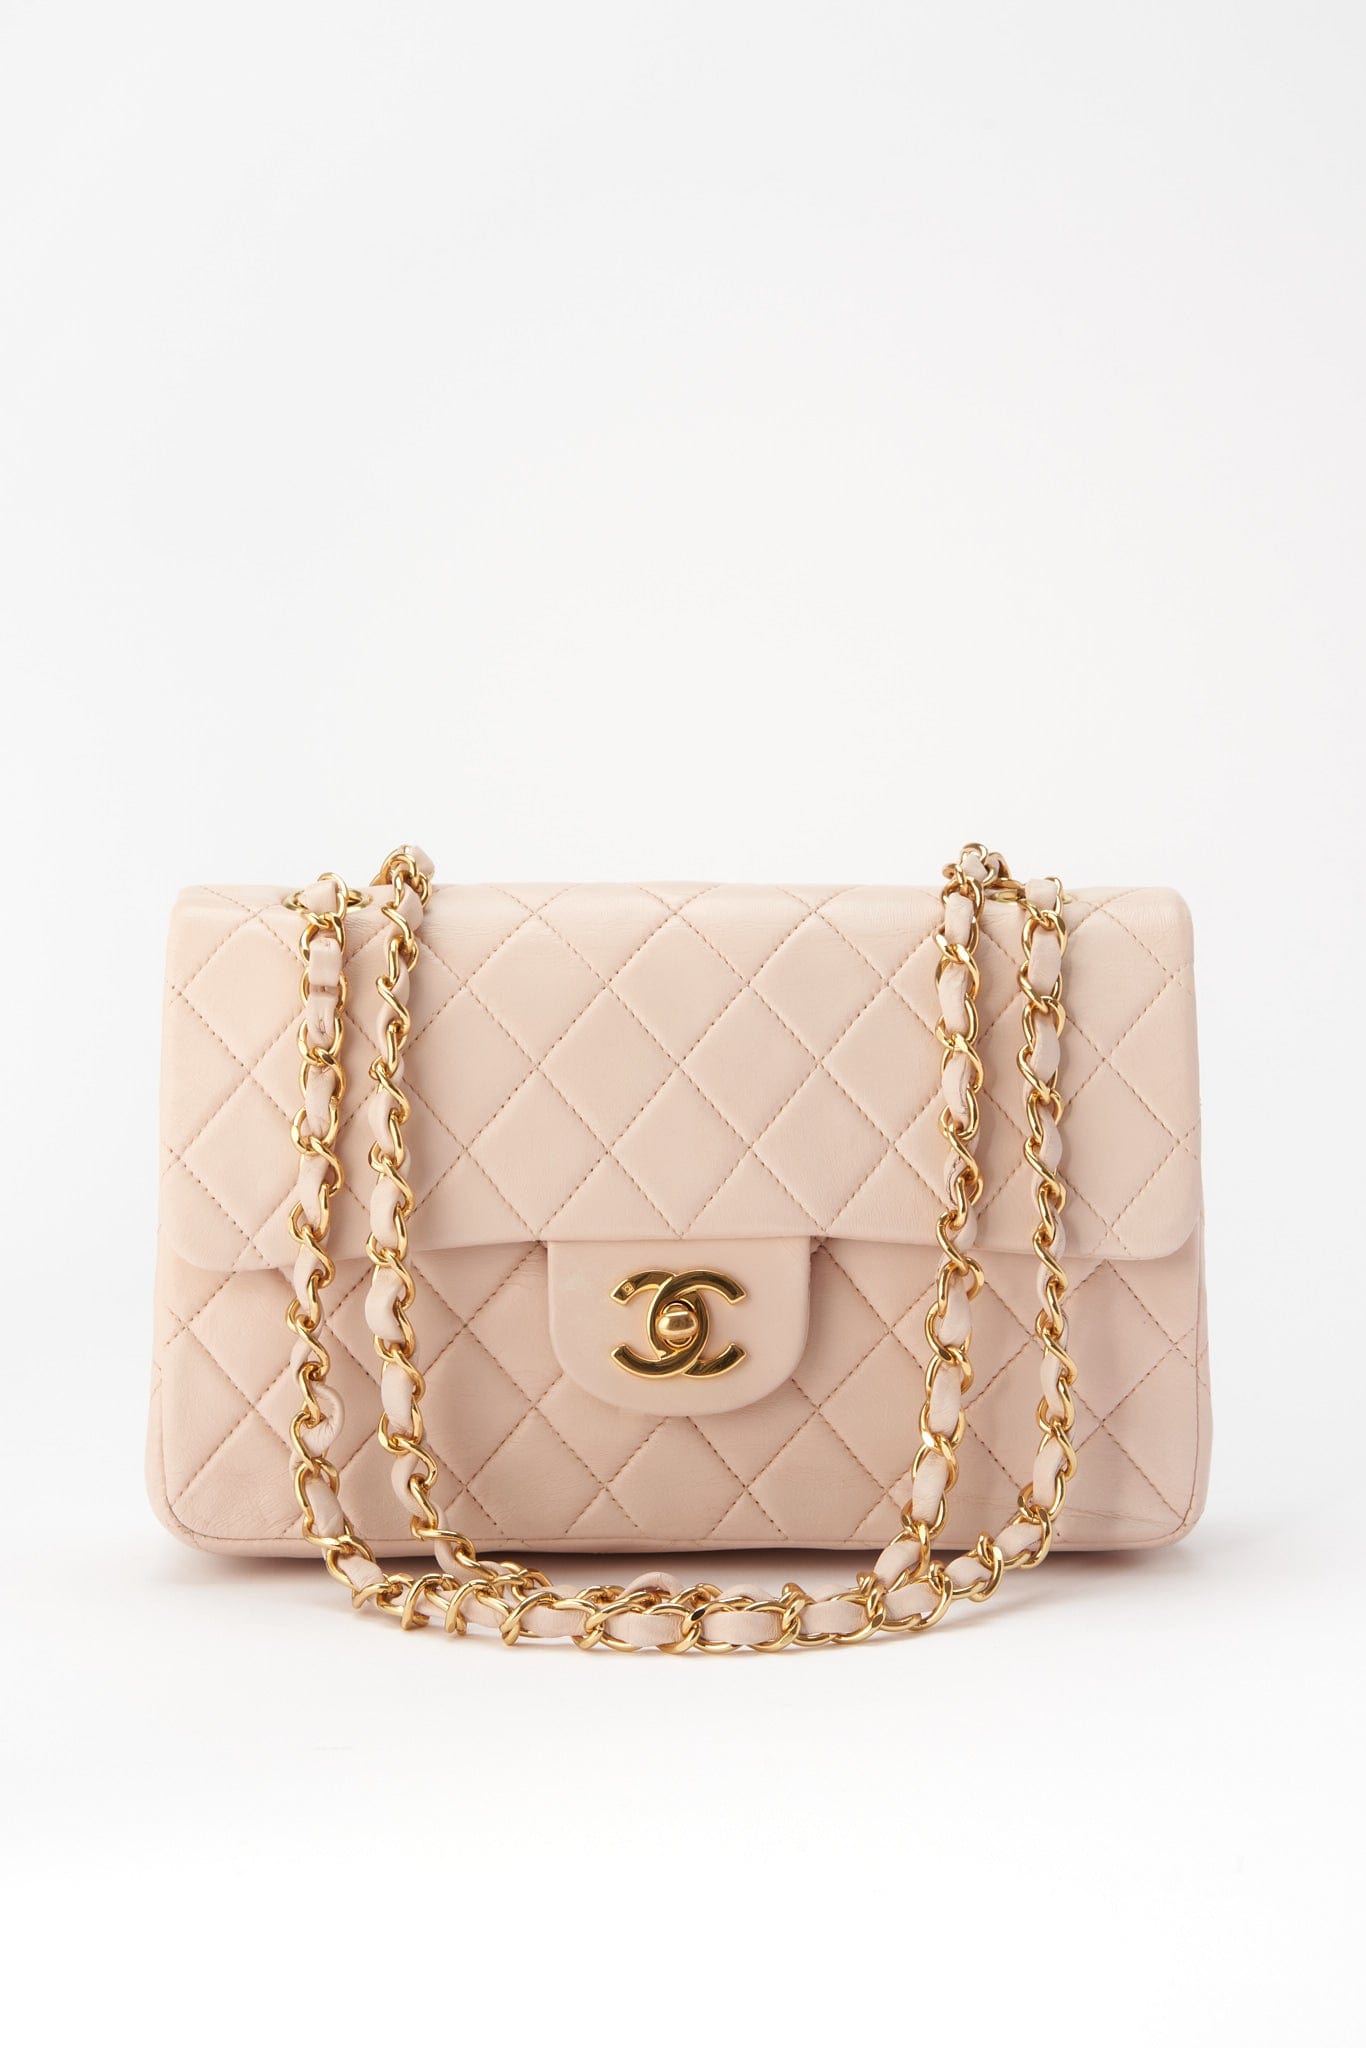 Chanel CC Large Gusset Flap Wallet Pink Caviar Light Gold Hardware